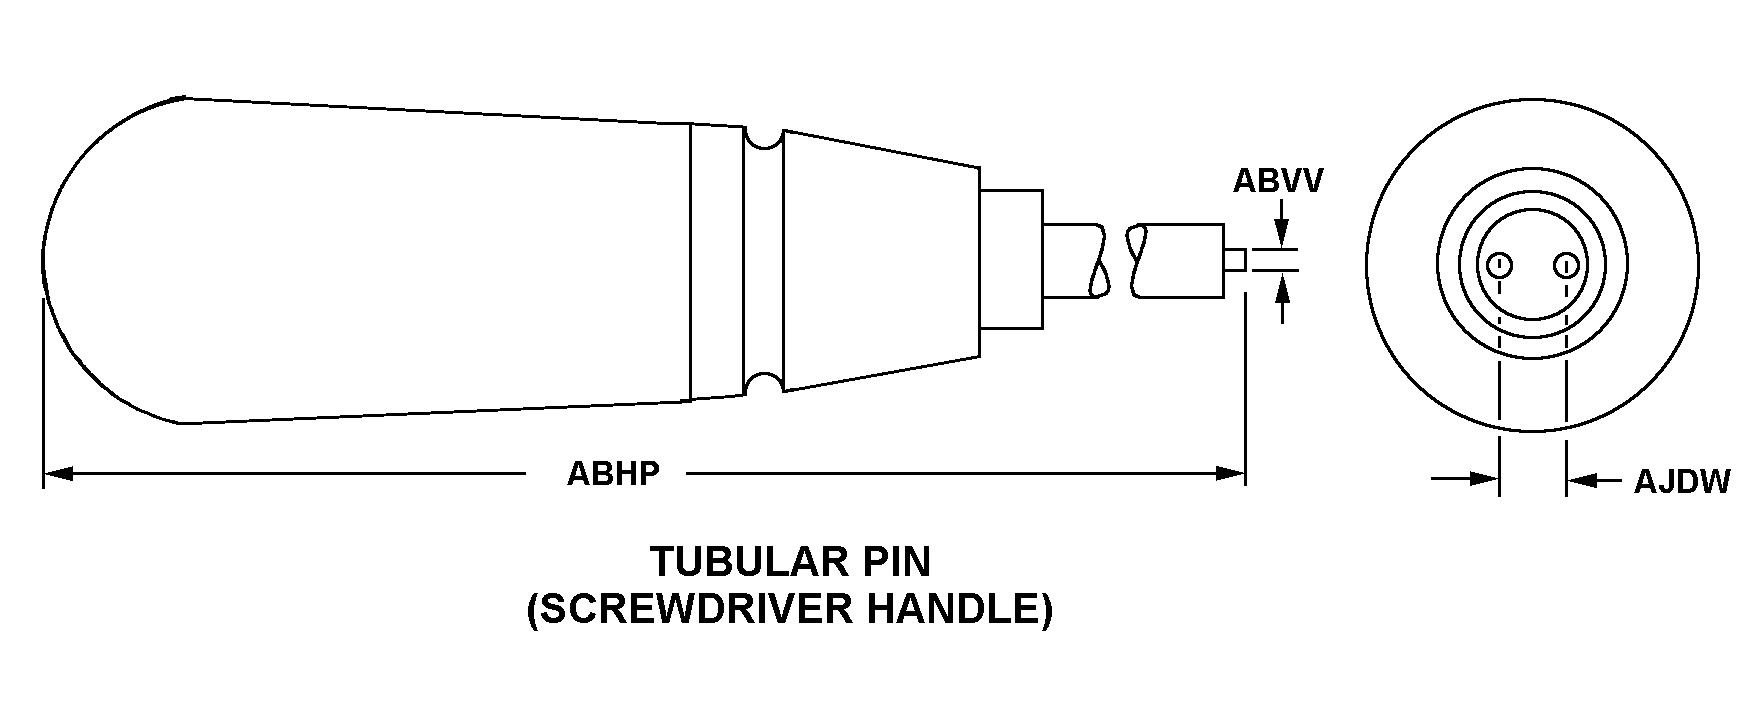 TUBULAR PIN style nsn 5120-01-490-6073